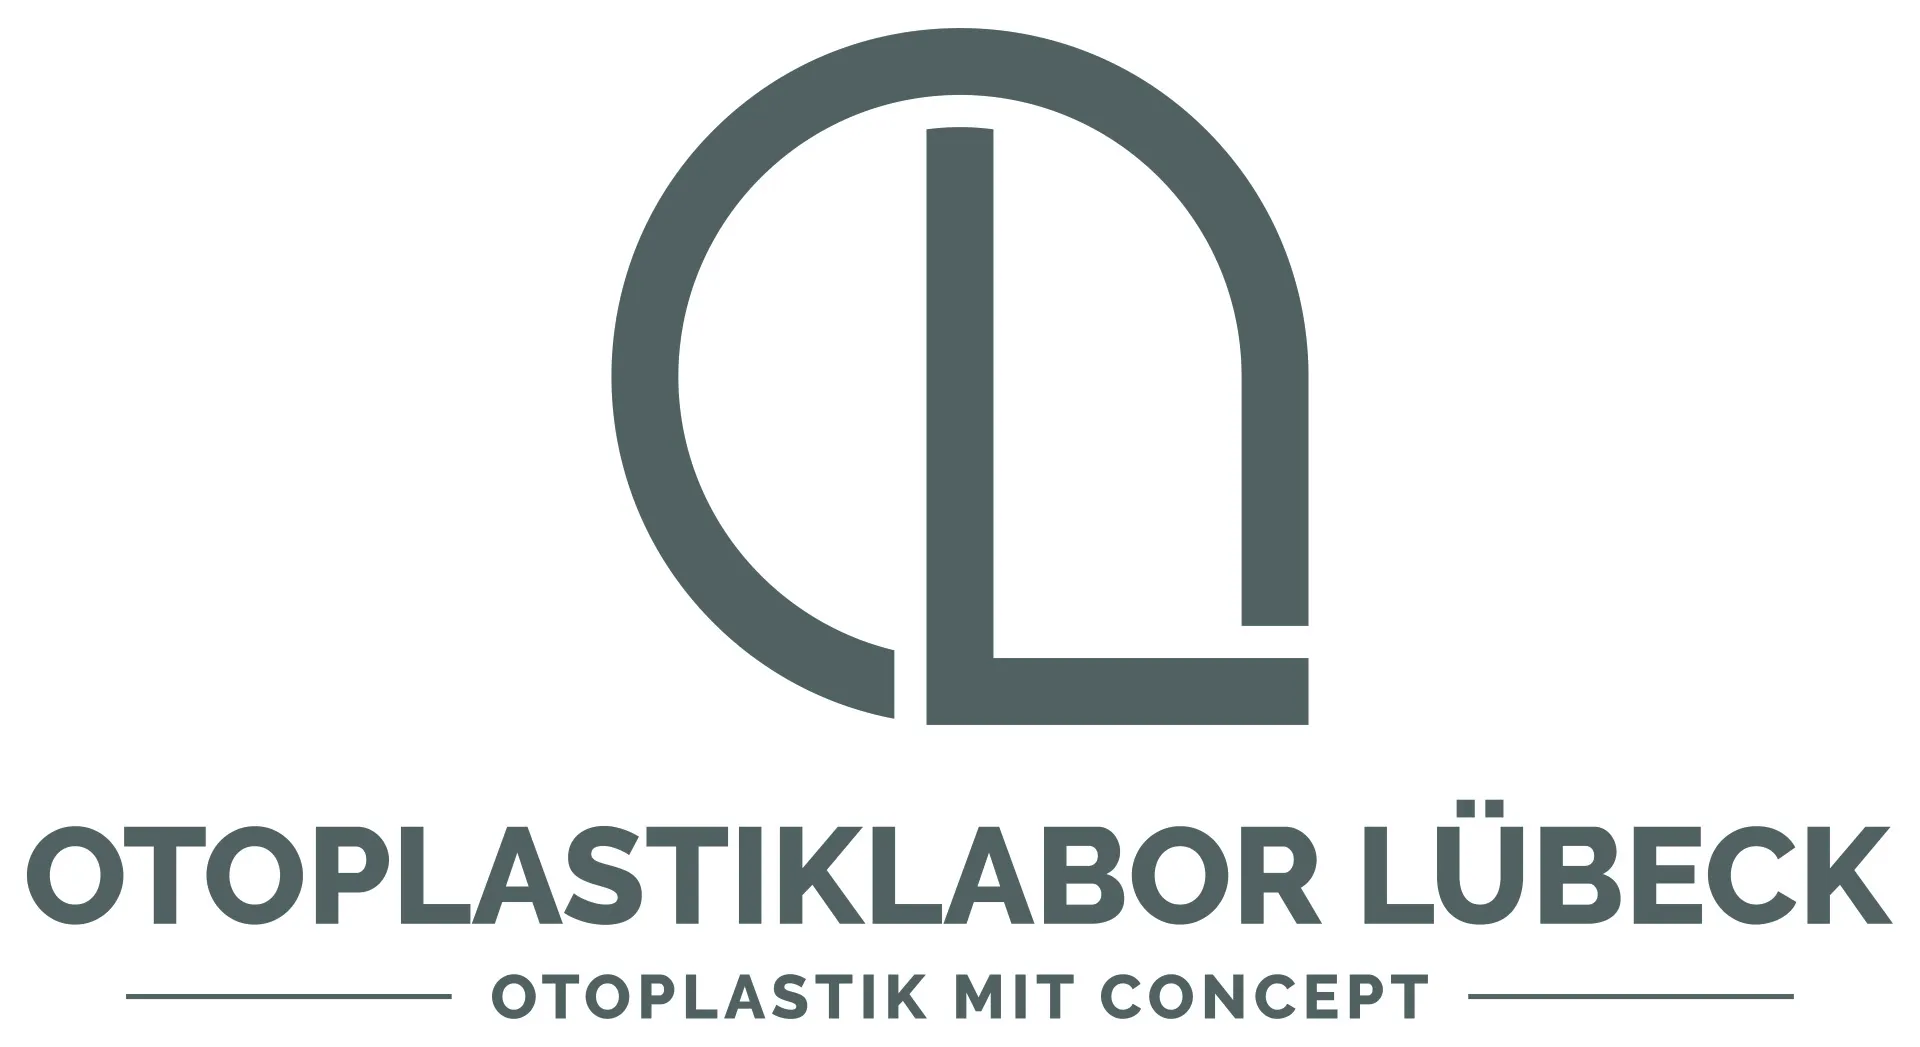 Otoplastiklabor Lübeck GmbH